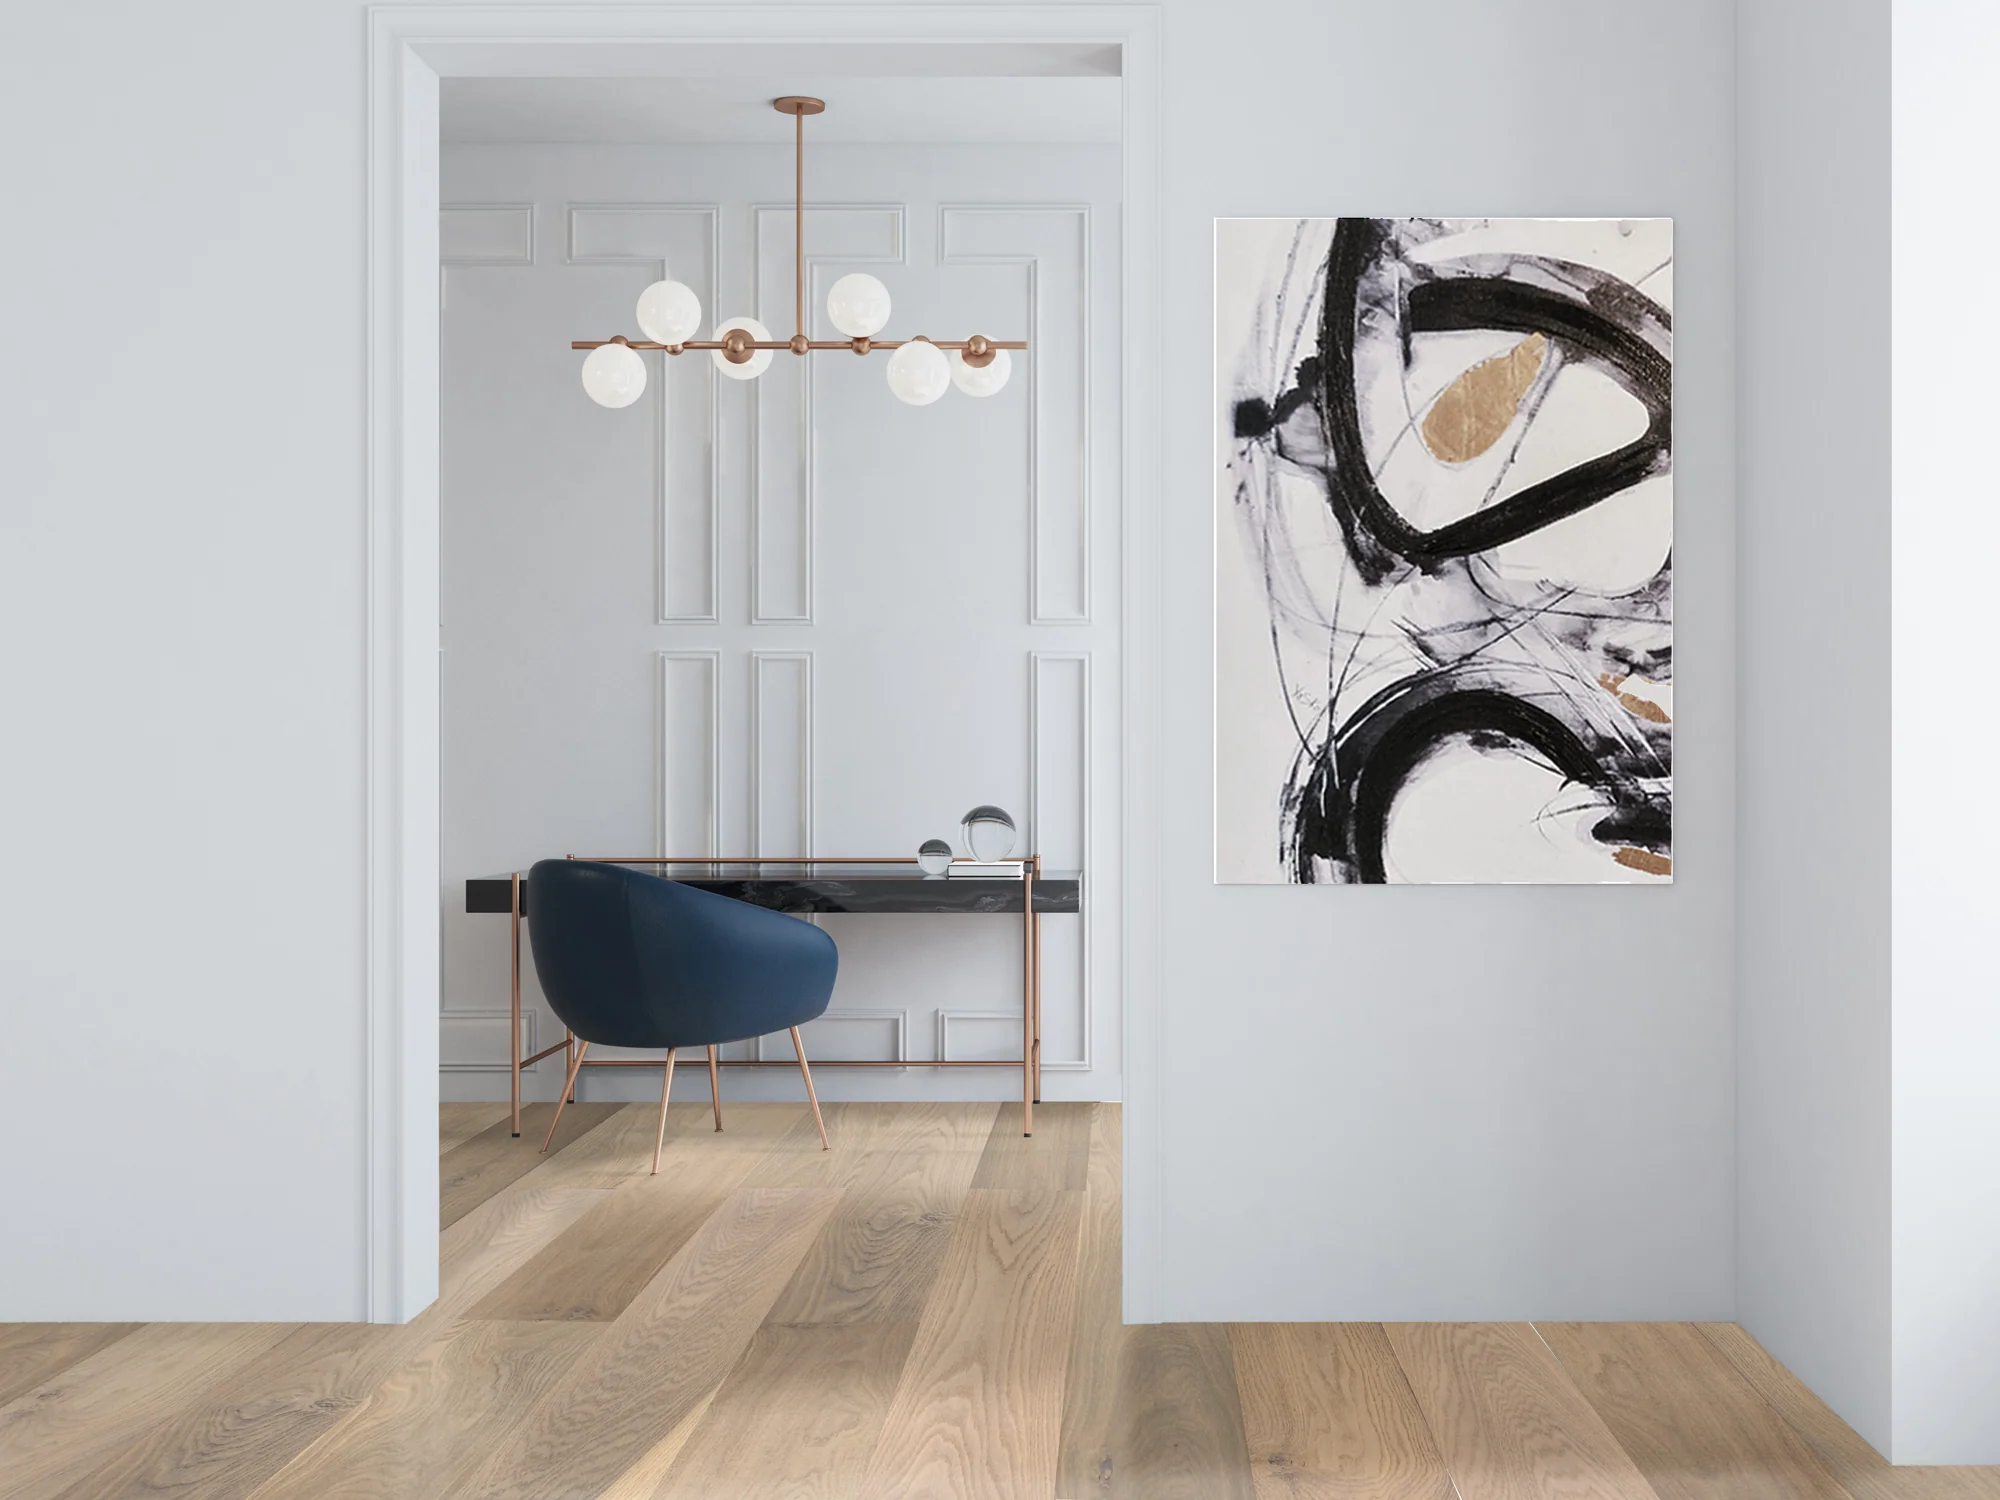 pravada floors product ENG MONT BLANC Le Soleil Collection Pravada Floors dpi